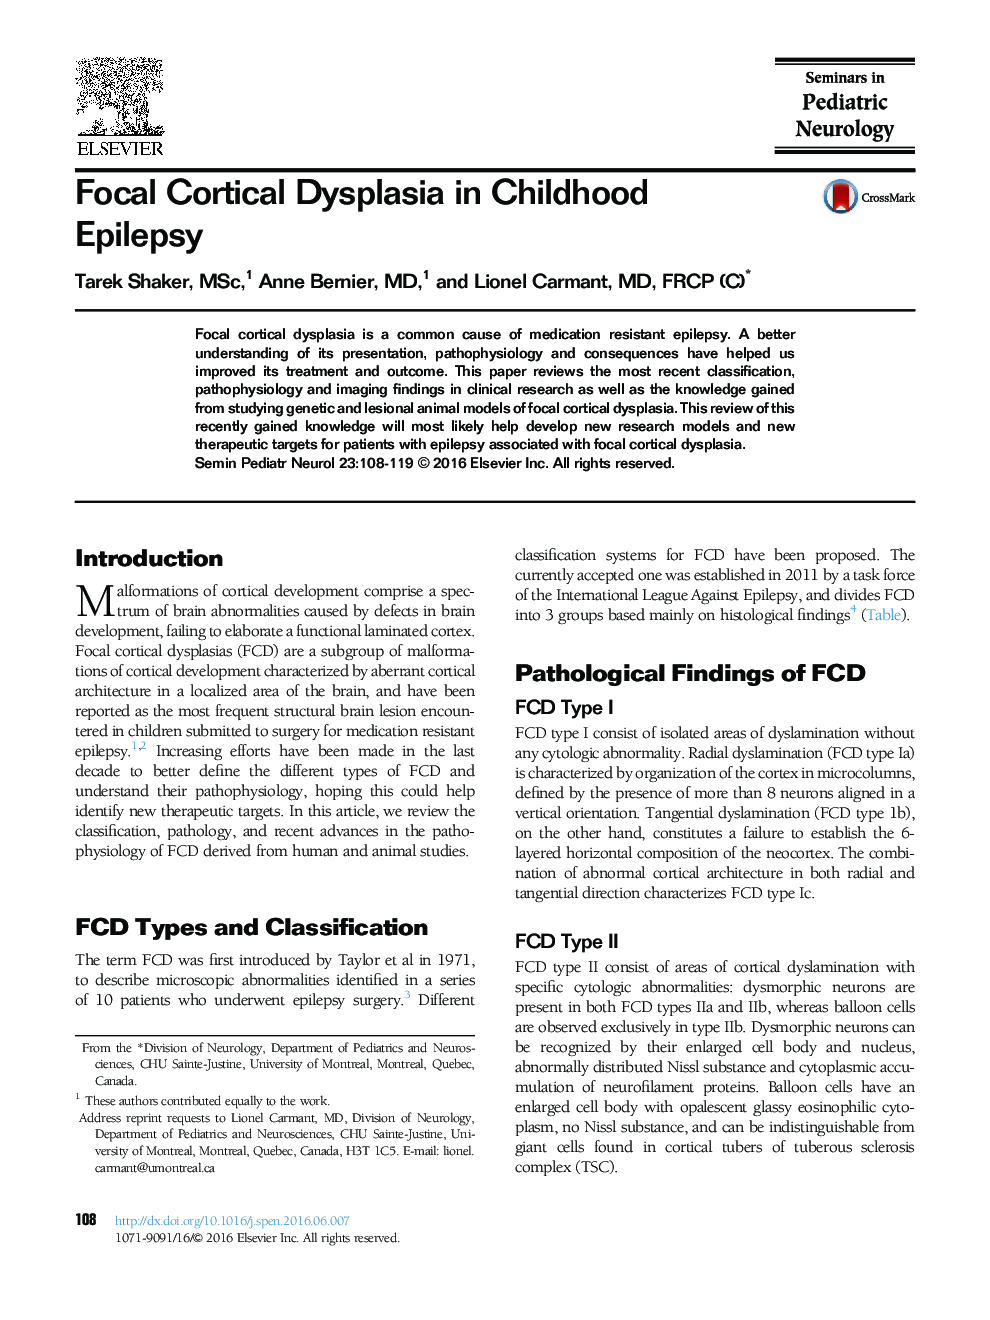 Focal Cortical Dysplasia in Childhood Epilepsy